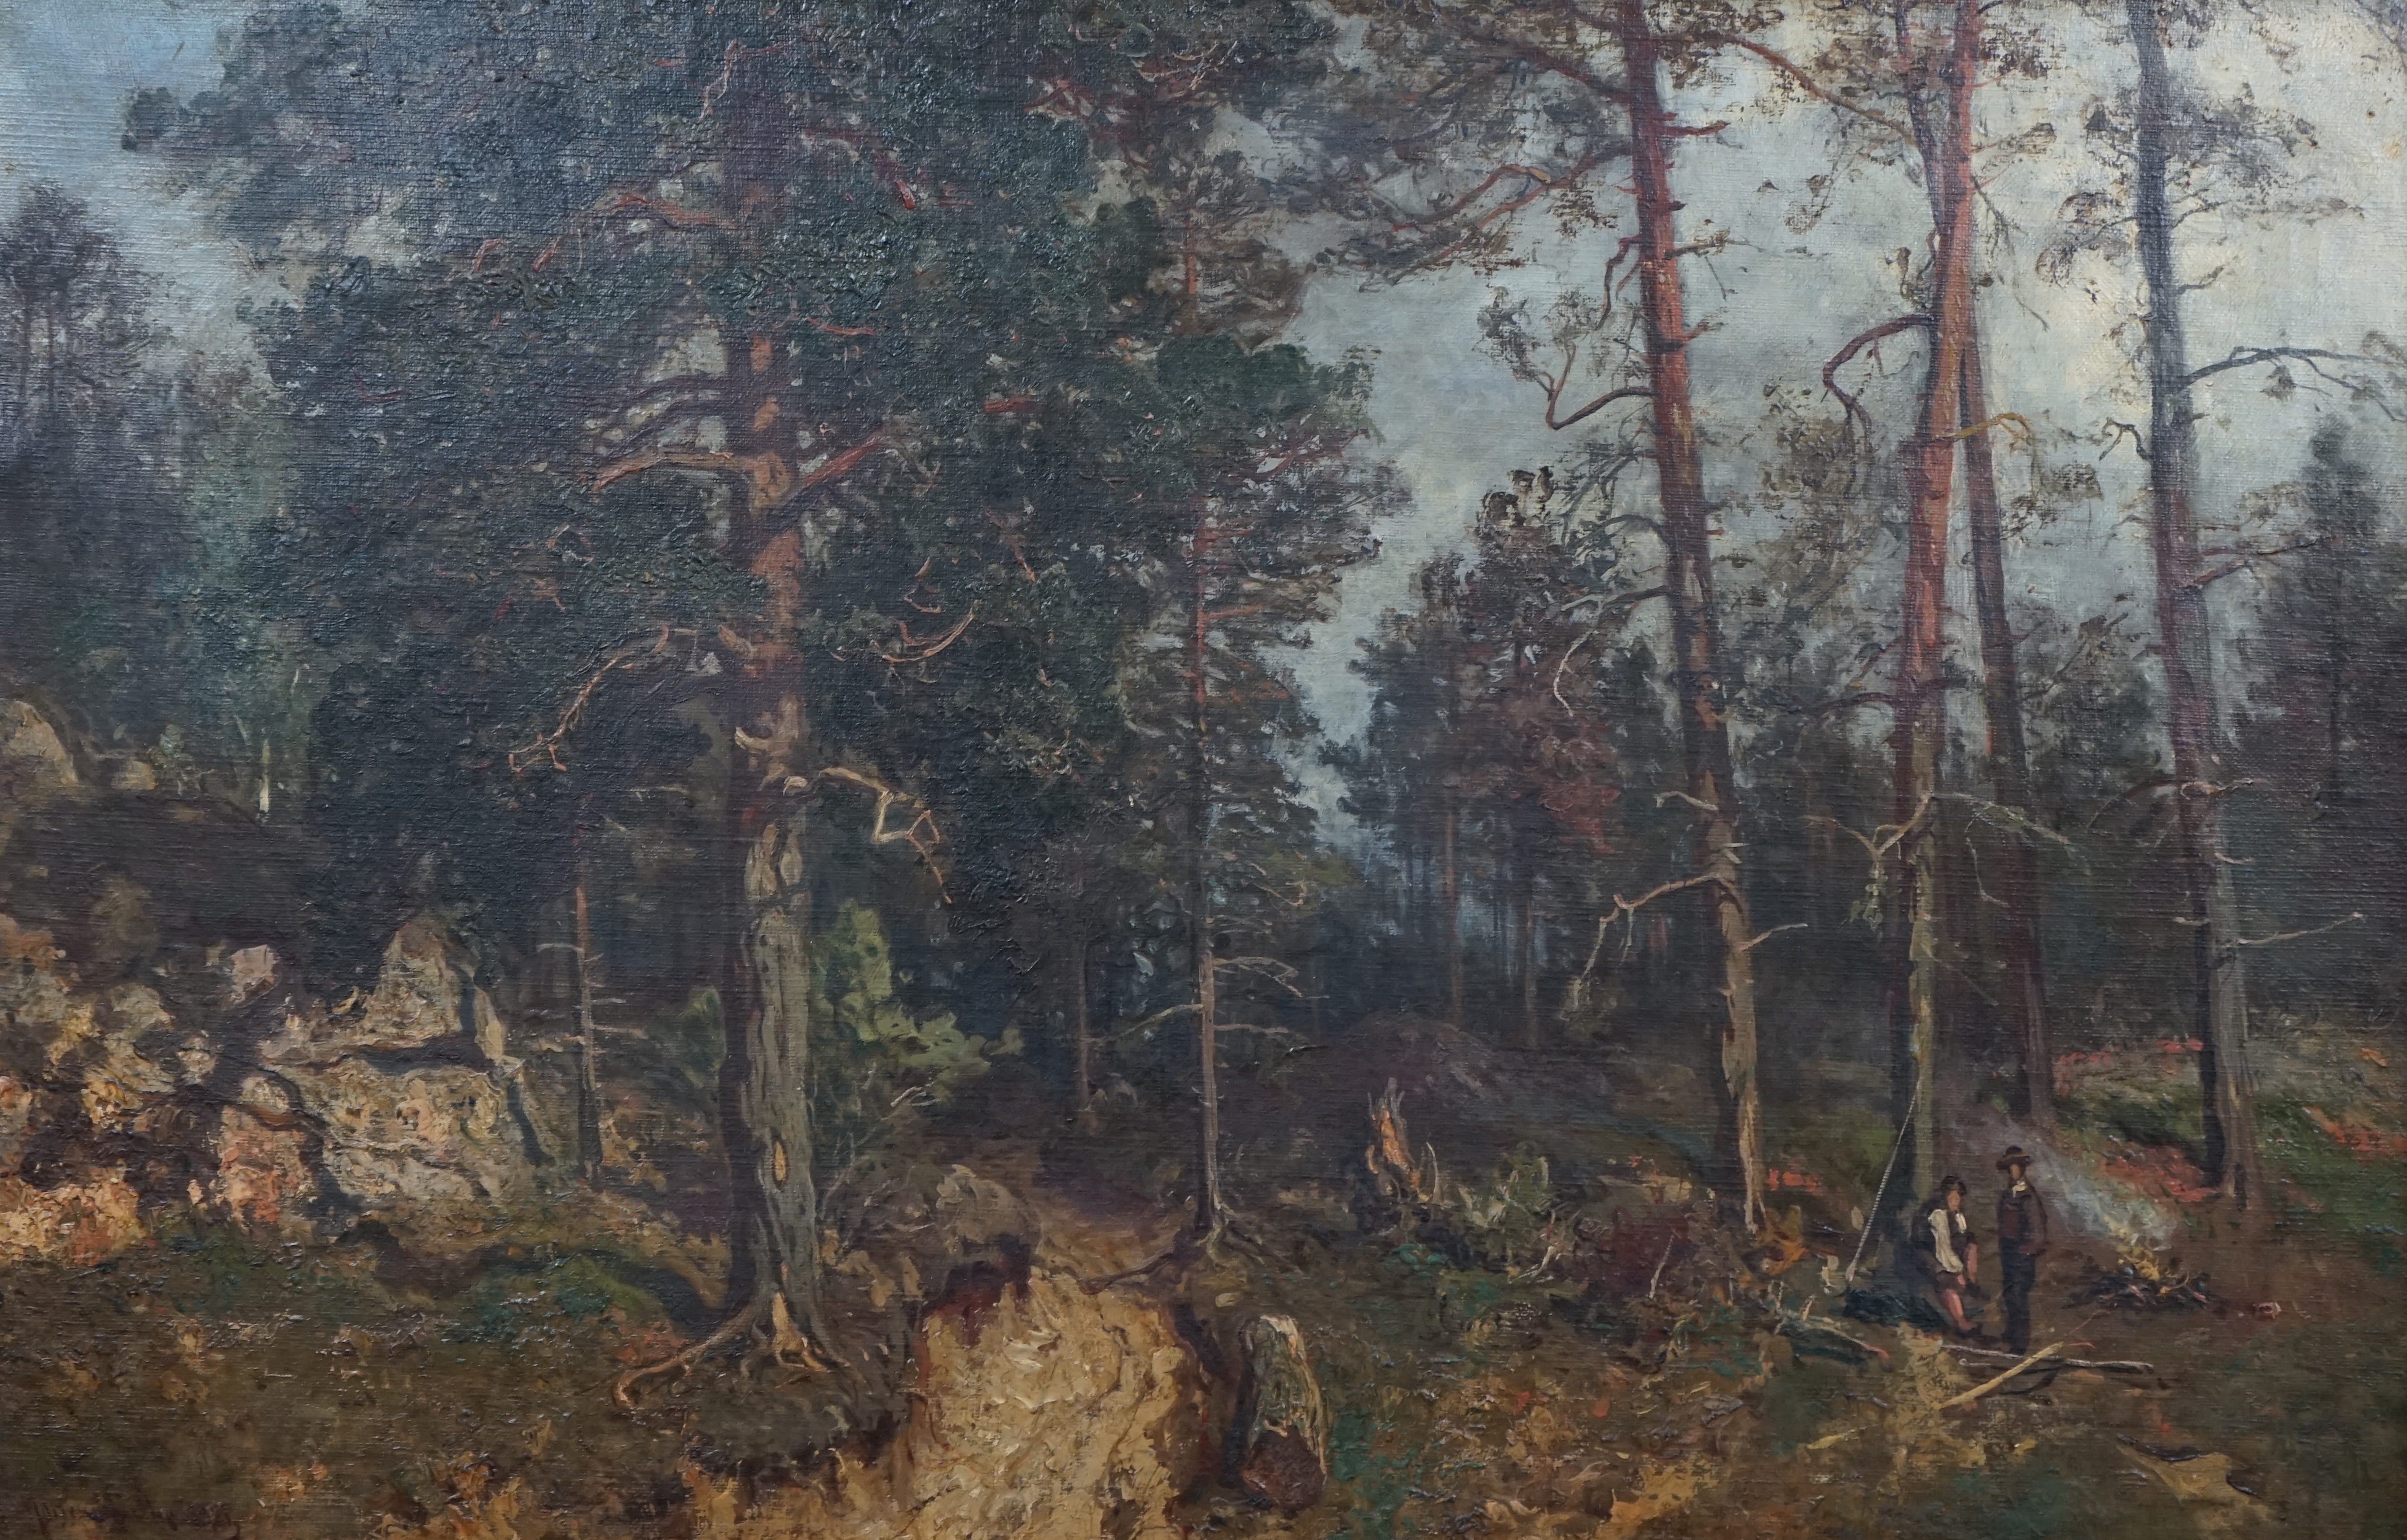 Morten Müller (Norwegian, 1828-1911), Woodmen in a forest clearing, oil on canvas, 40 x 62cm